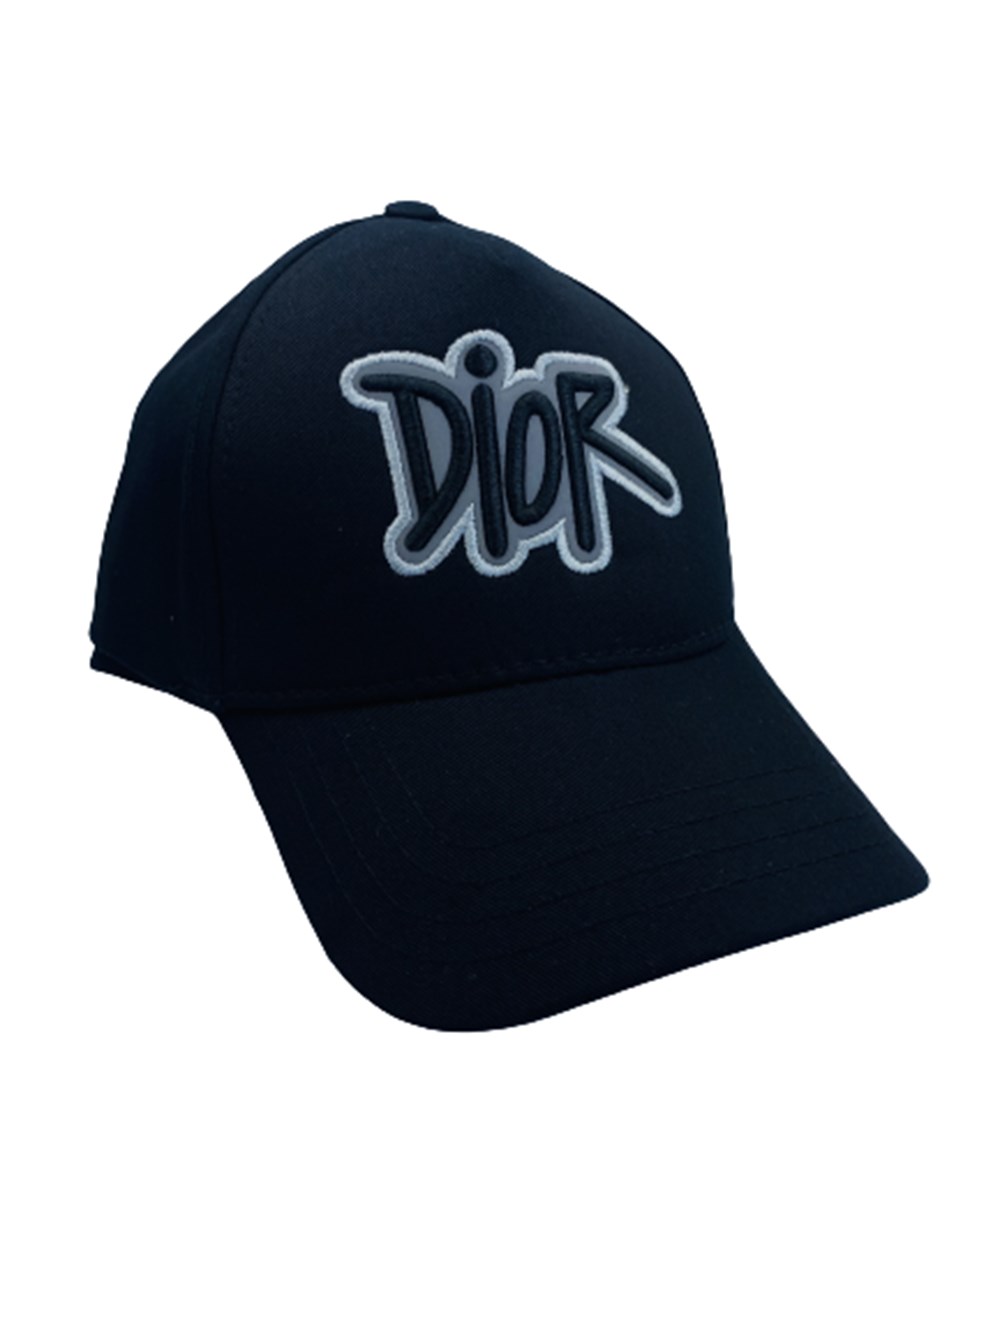 Beyzbol Model Dior Reflektörlü Siyah Şapka